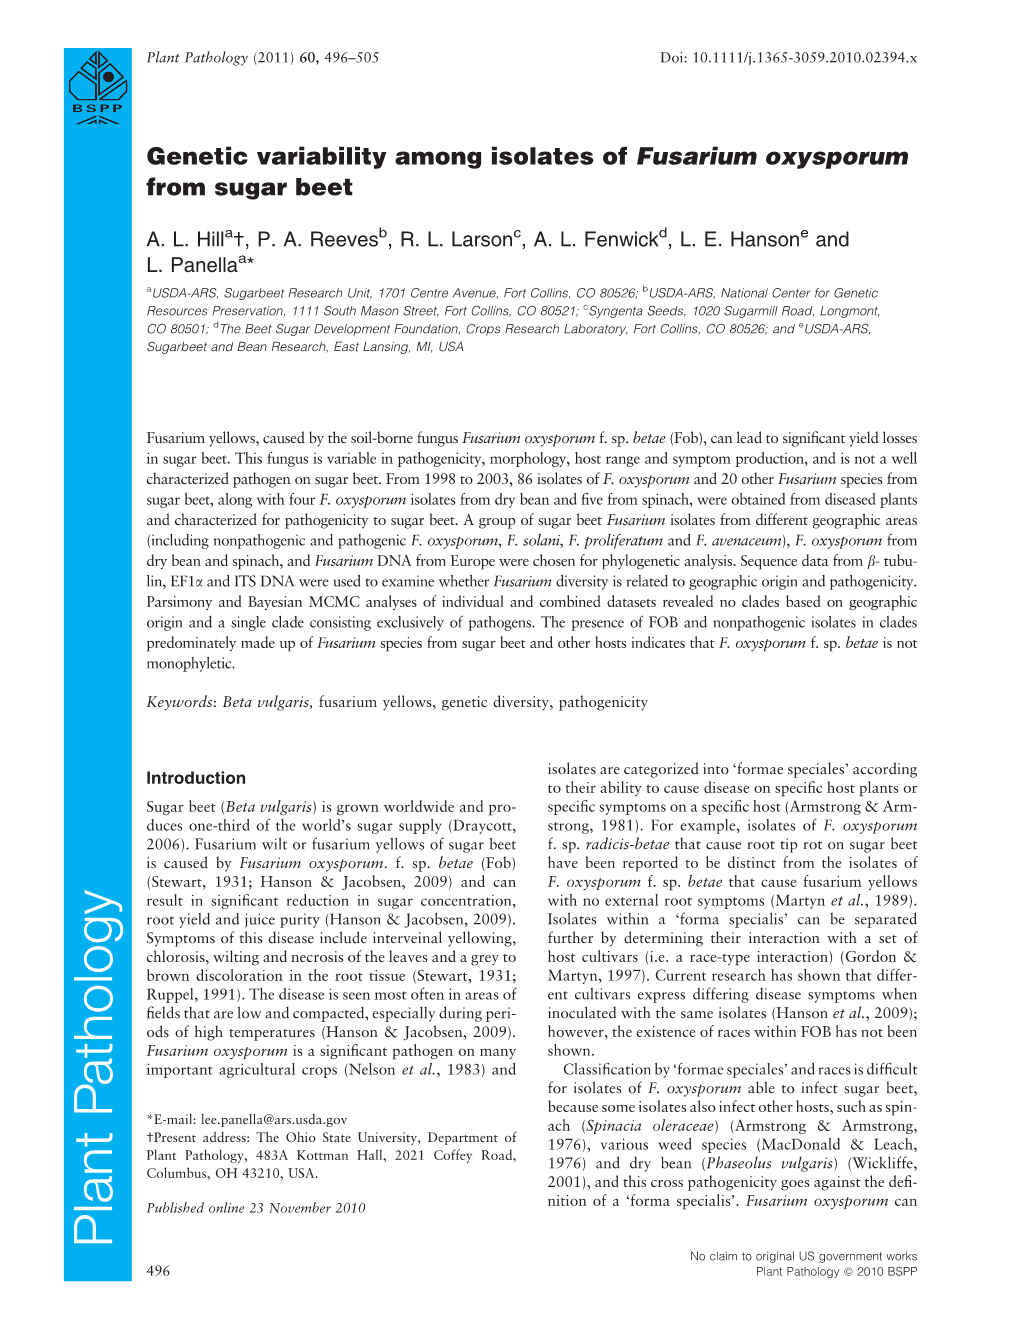 Genetic Variability Among Isolates of Fusarium Oxysporum from Sugar Beet